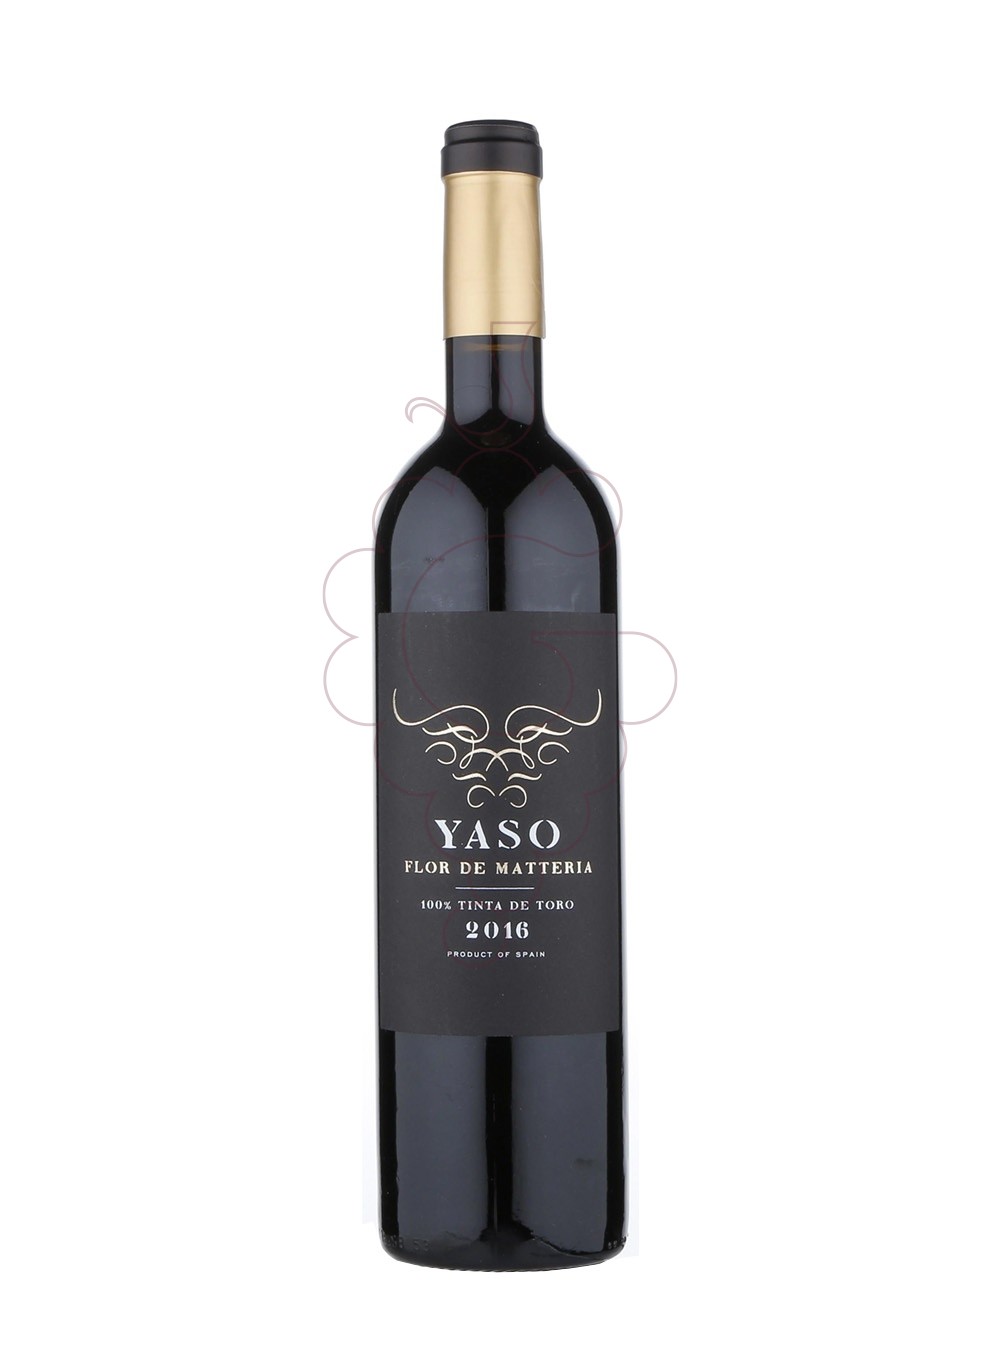 Foto Yaso flor de matteria 2016 vi negre